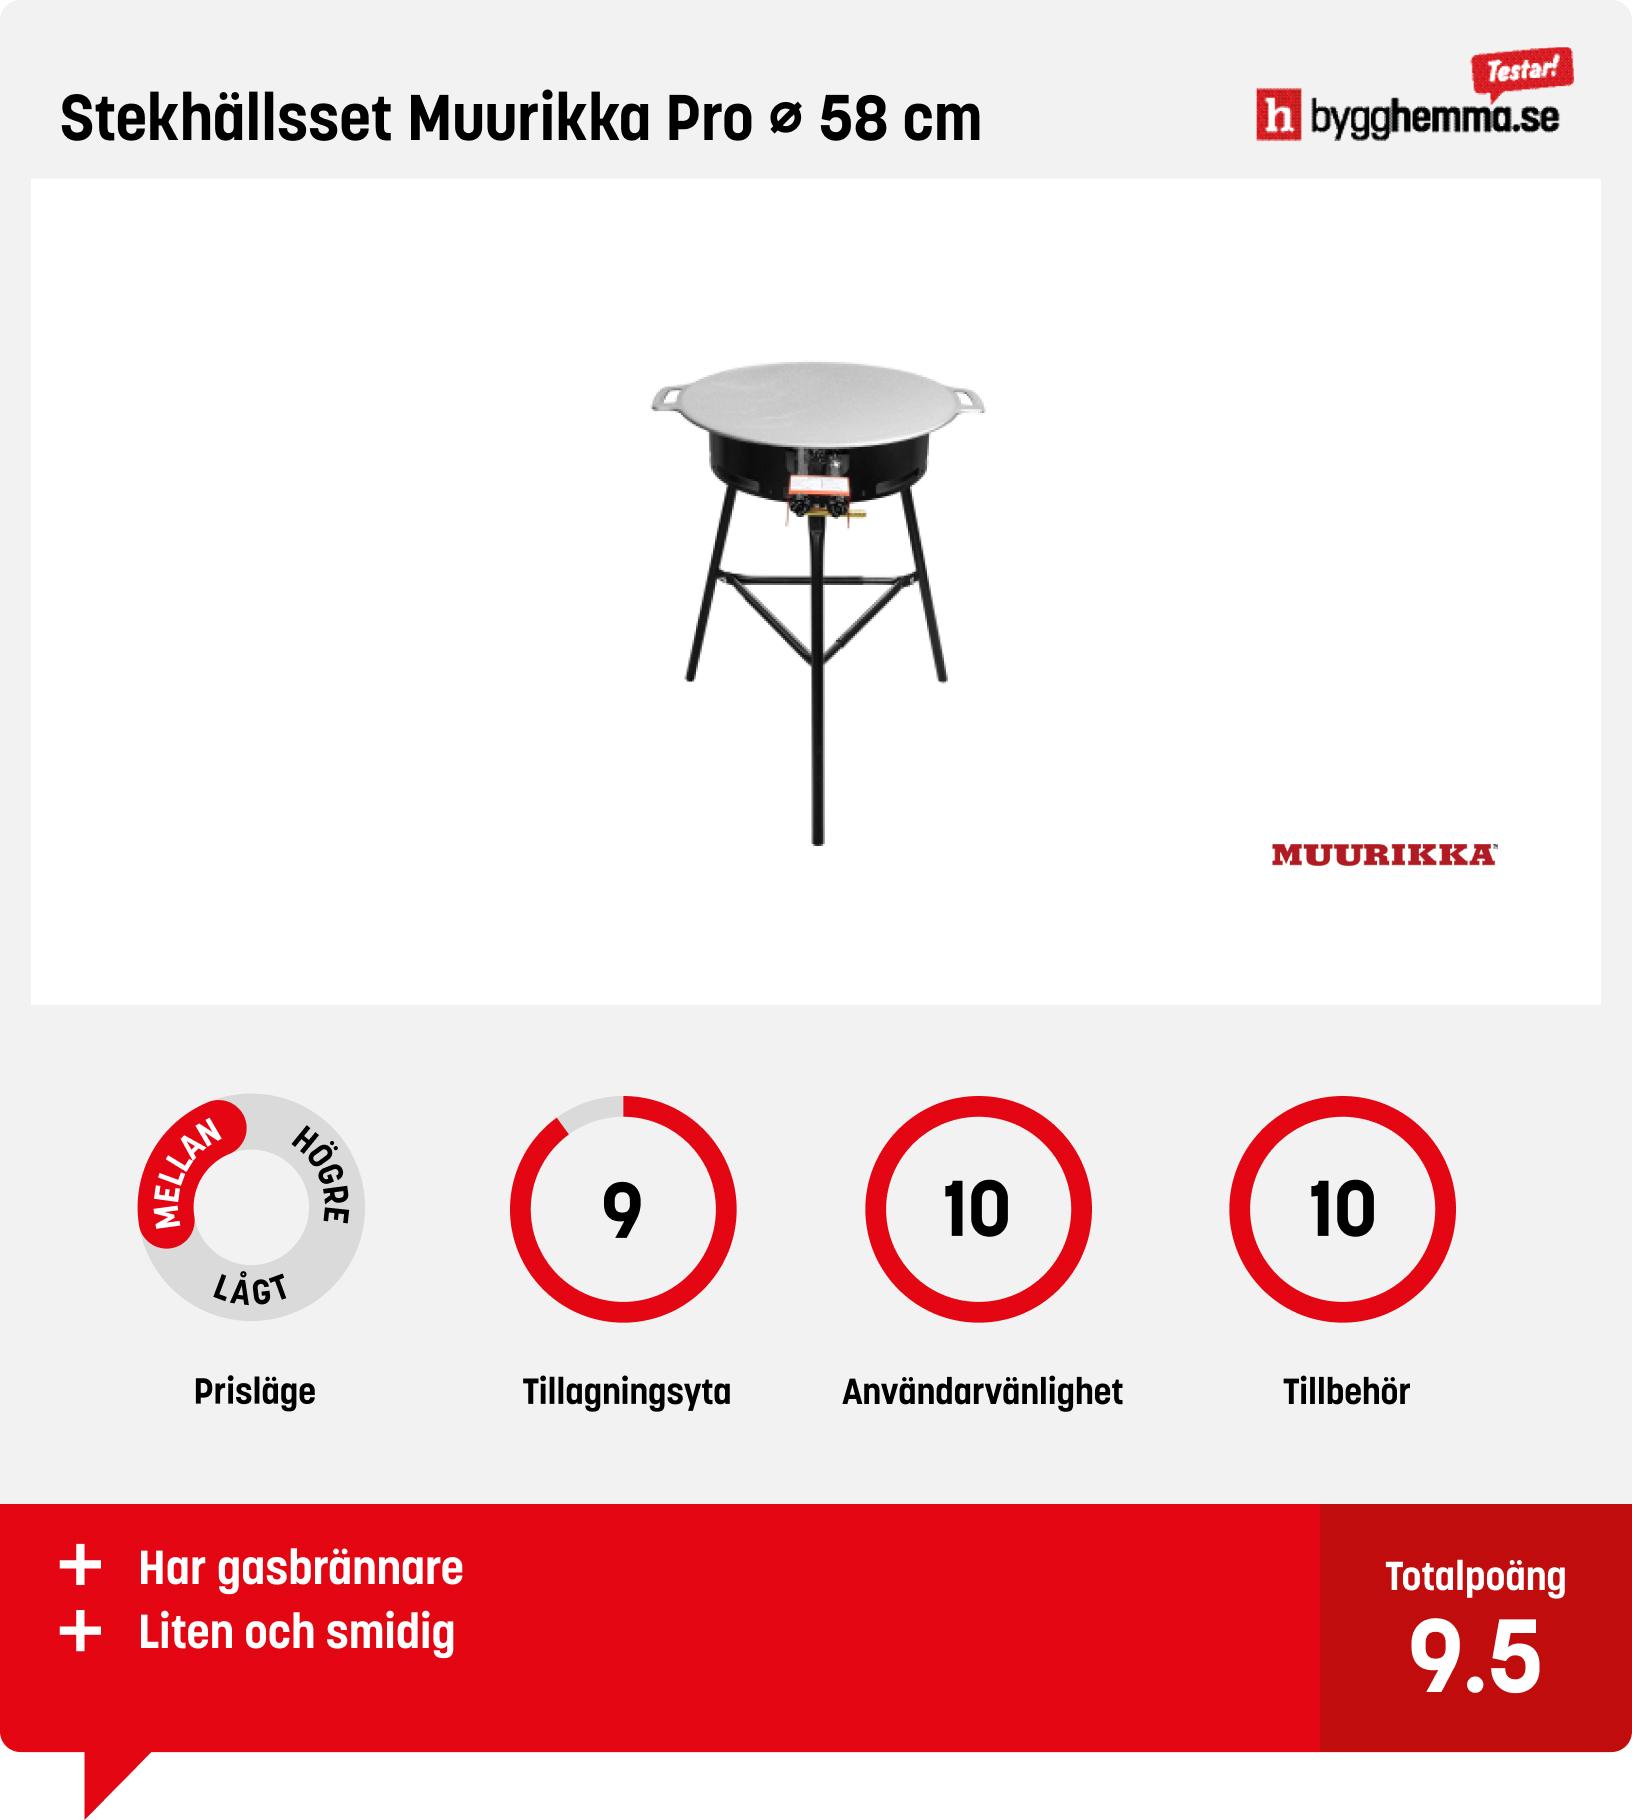 Muurikka bäst i test - Stekhällsset Muurikka Pro ⌀ 58 cm